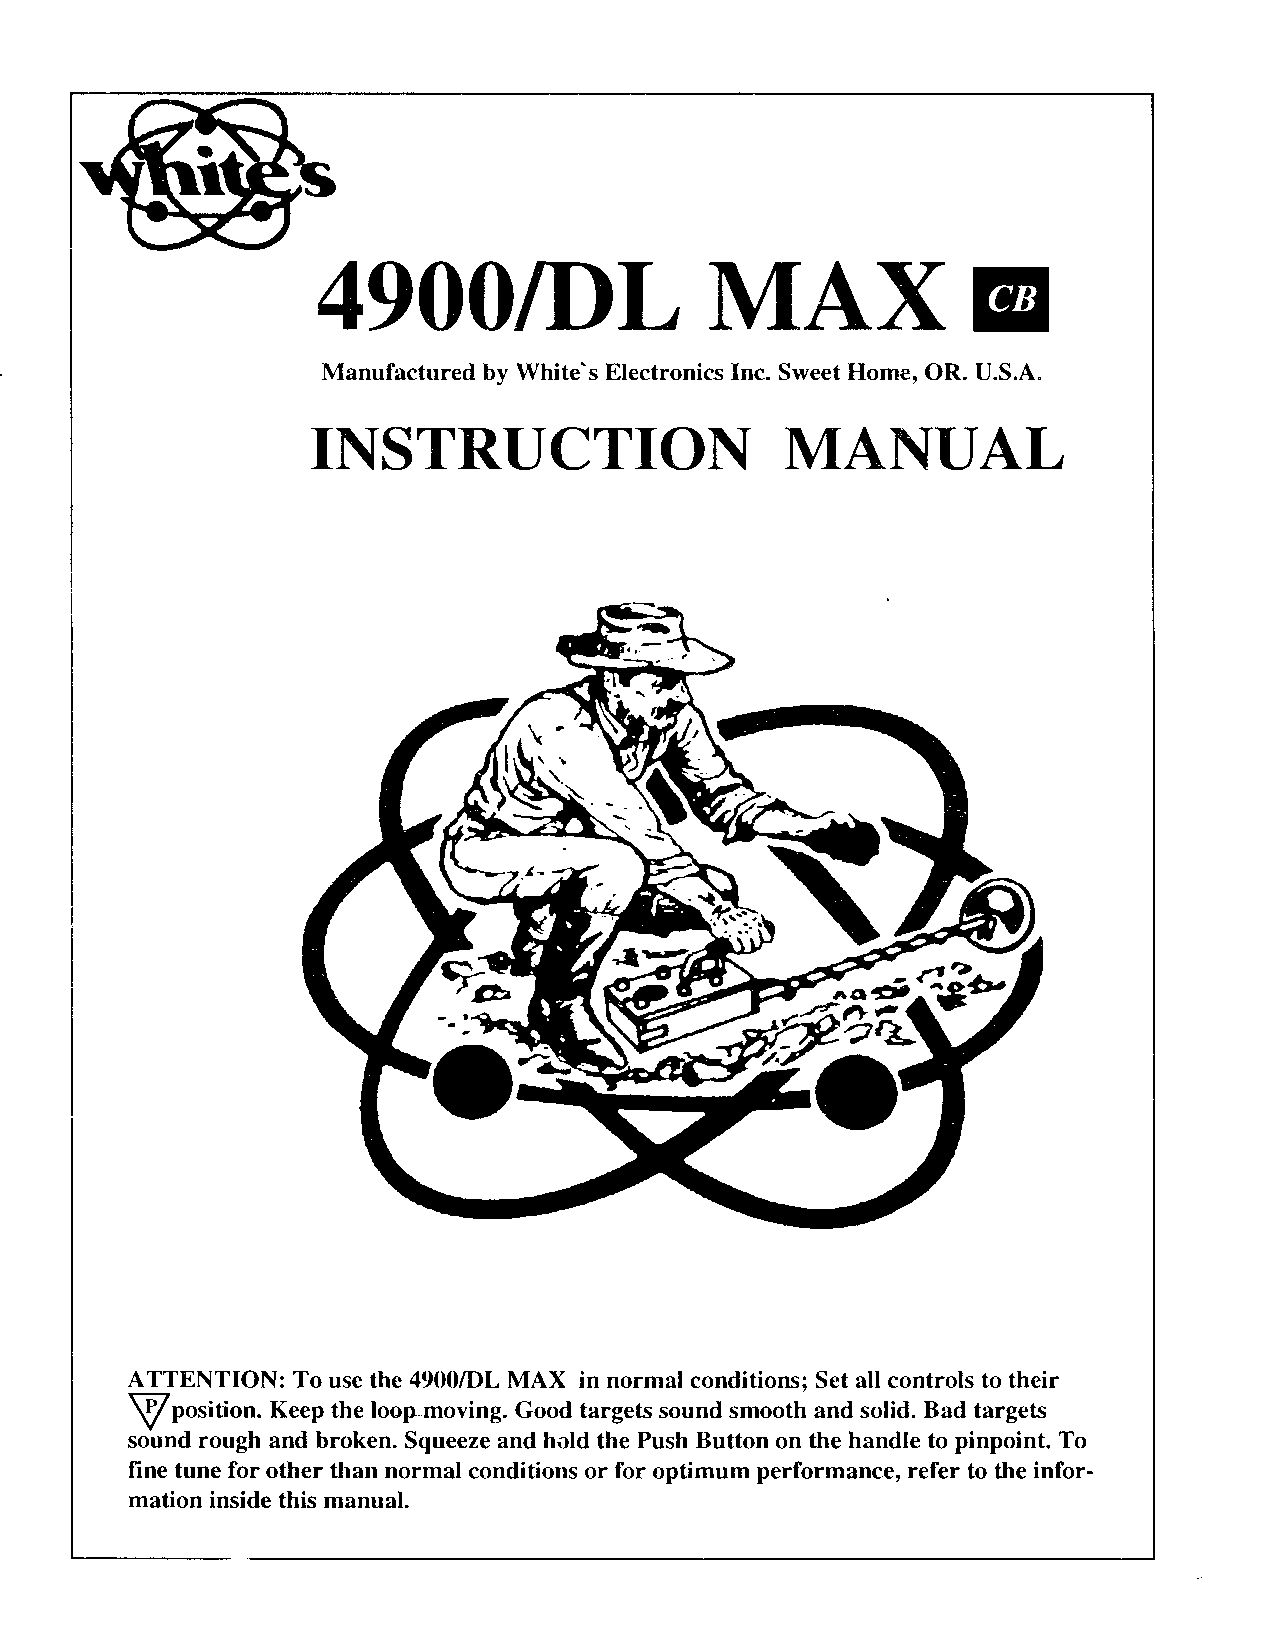 Whites Electronics CM 4900 DL MAX User Manual